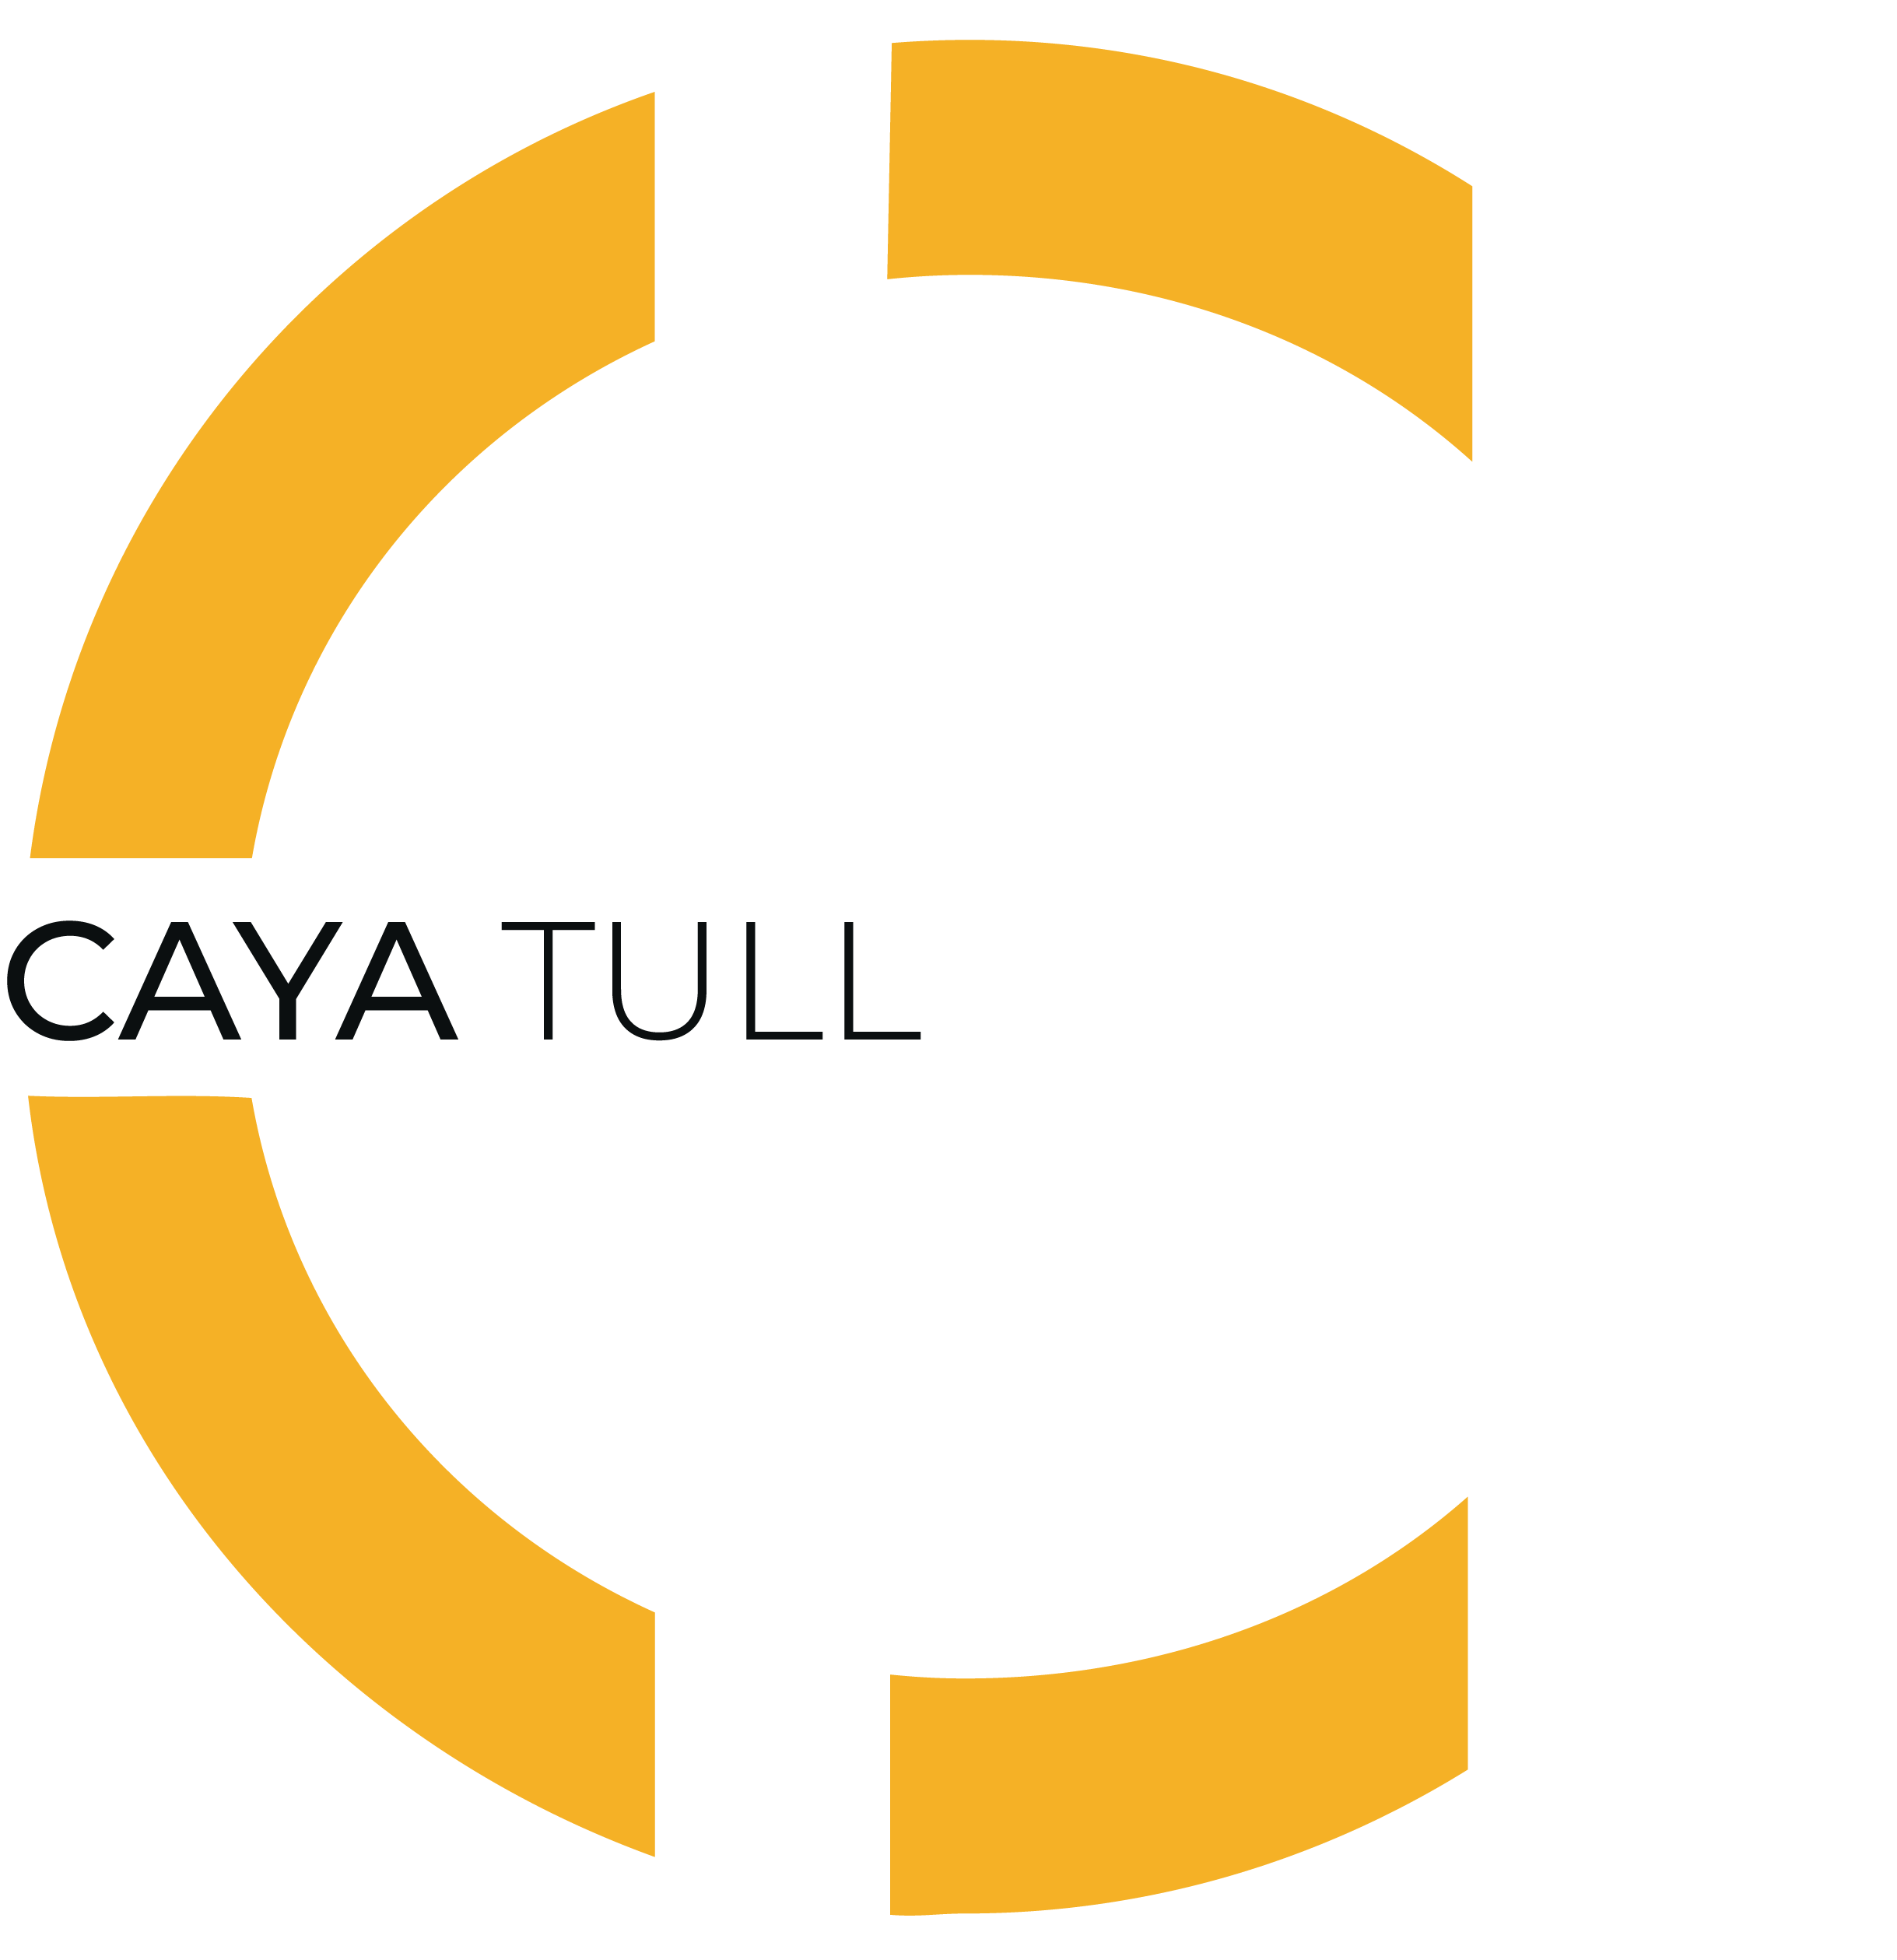 Caya Tull